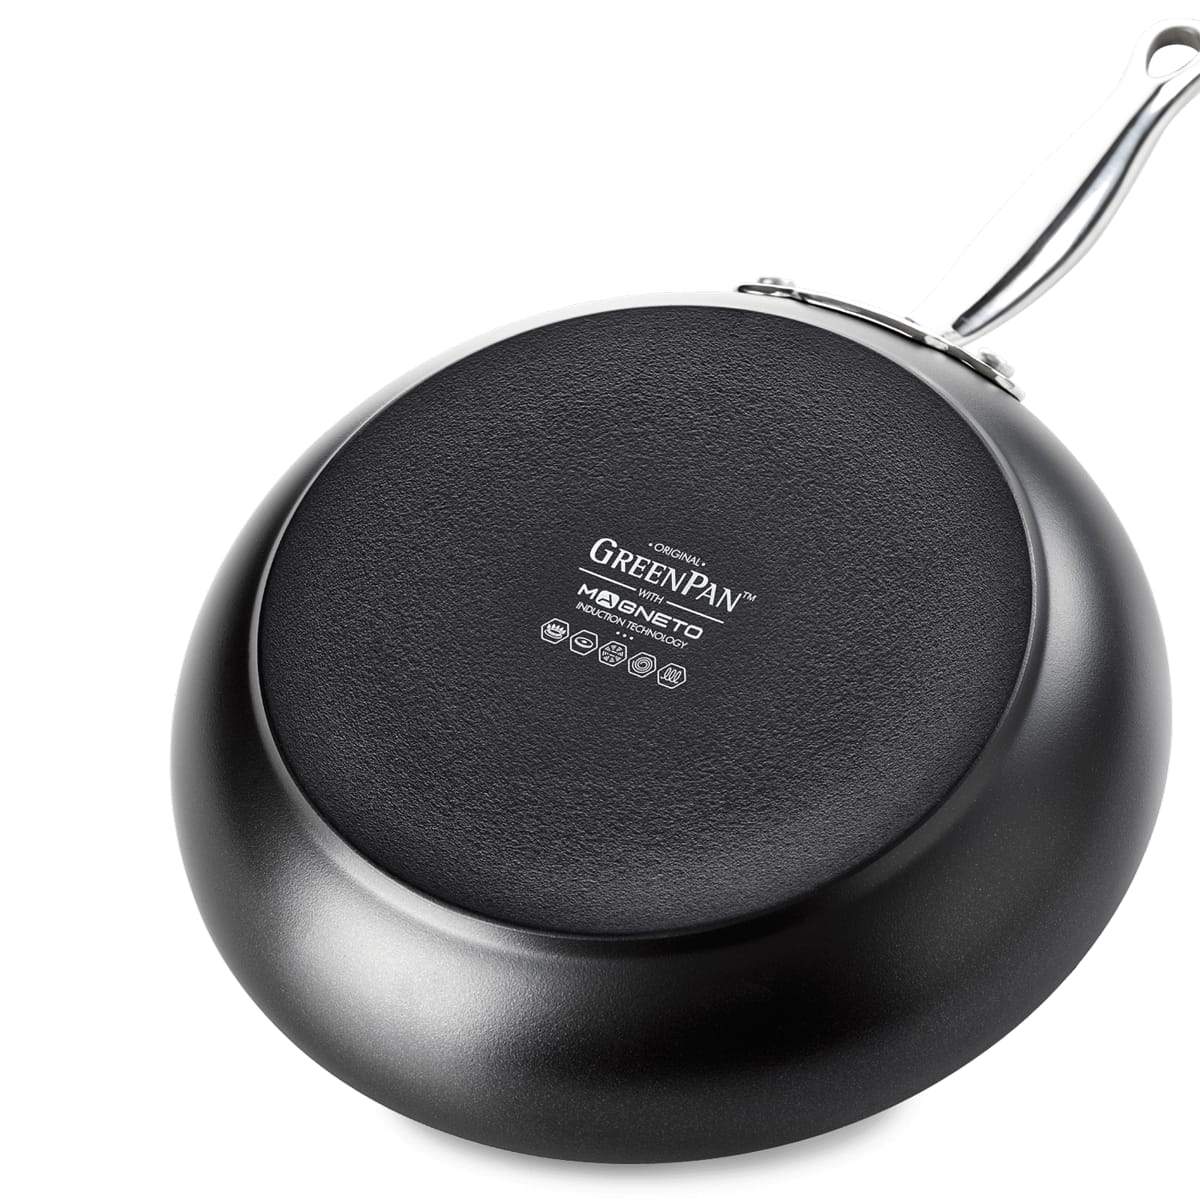 CW002206-002 - Barcelona Frying Pan, Black - 24cm - Product Image 4